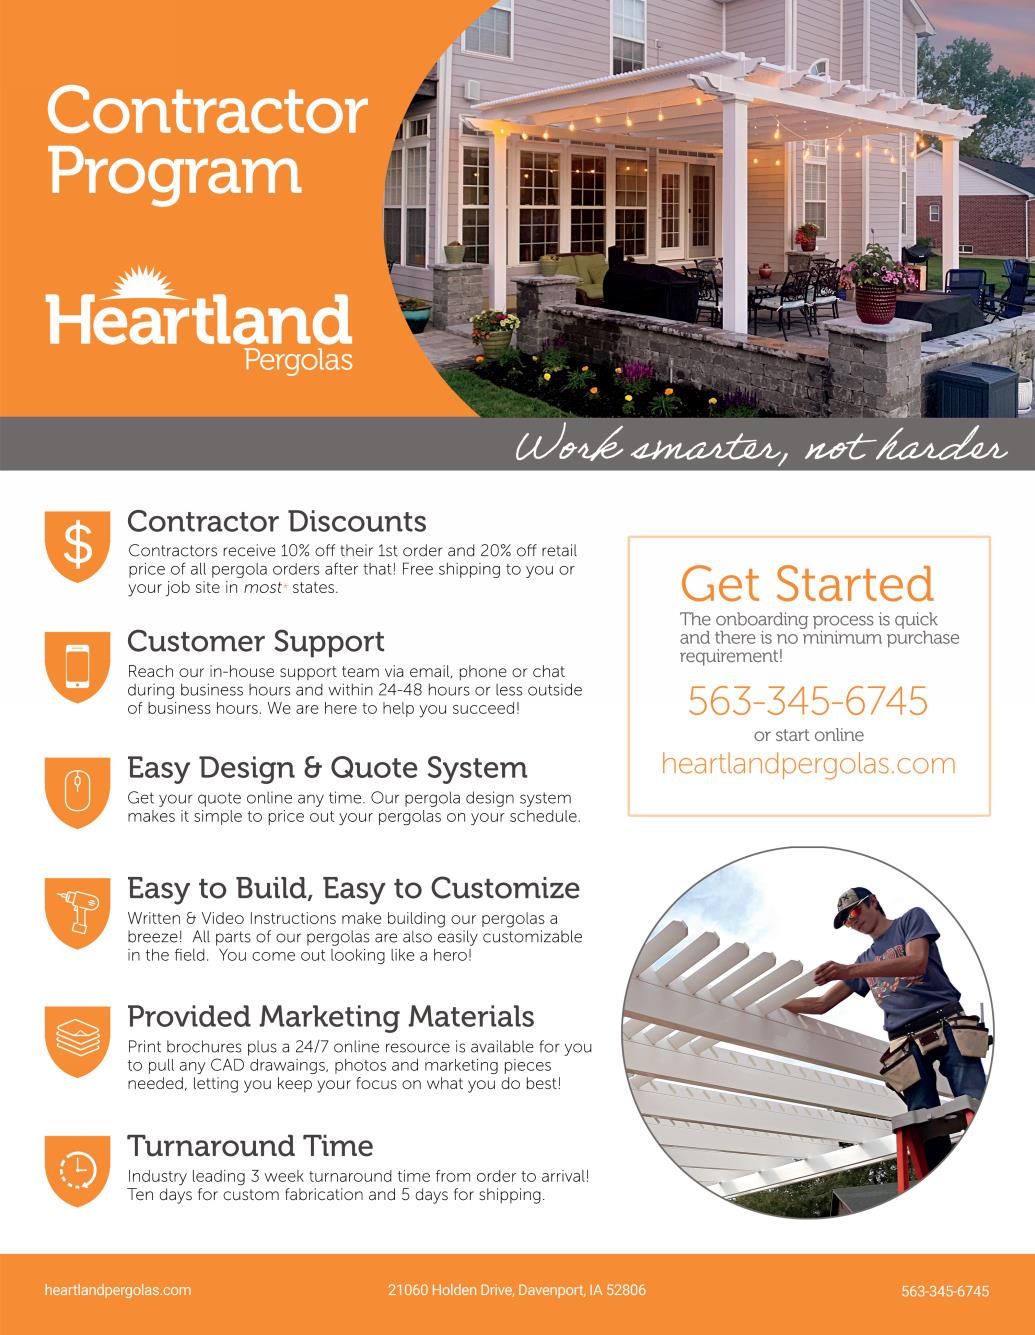 Heartland Pergola Contractor Program front cover